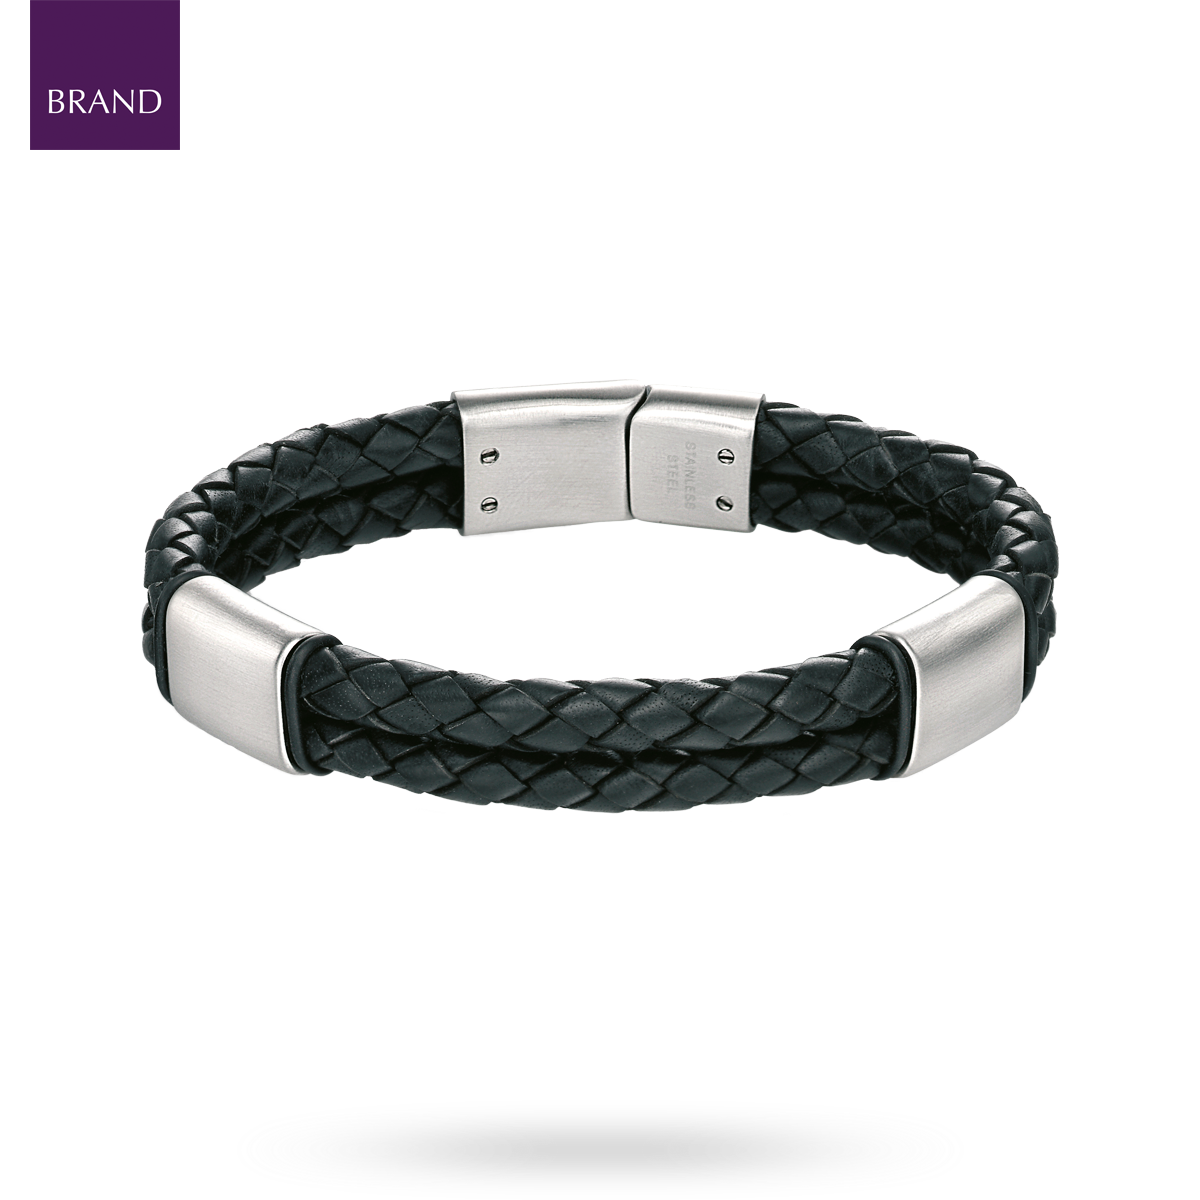 Men's Black Leather Bracelet With Matt Steel Bar Element.